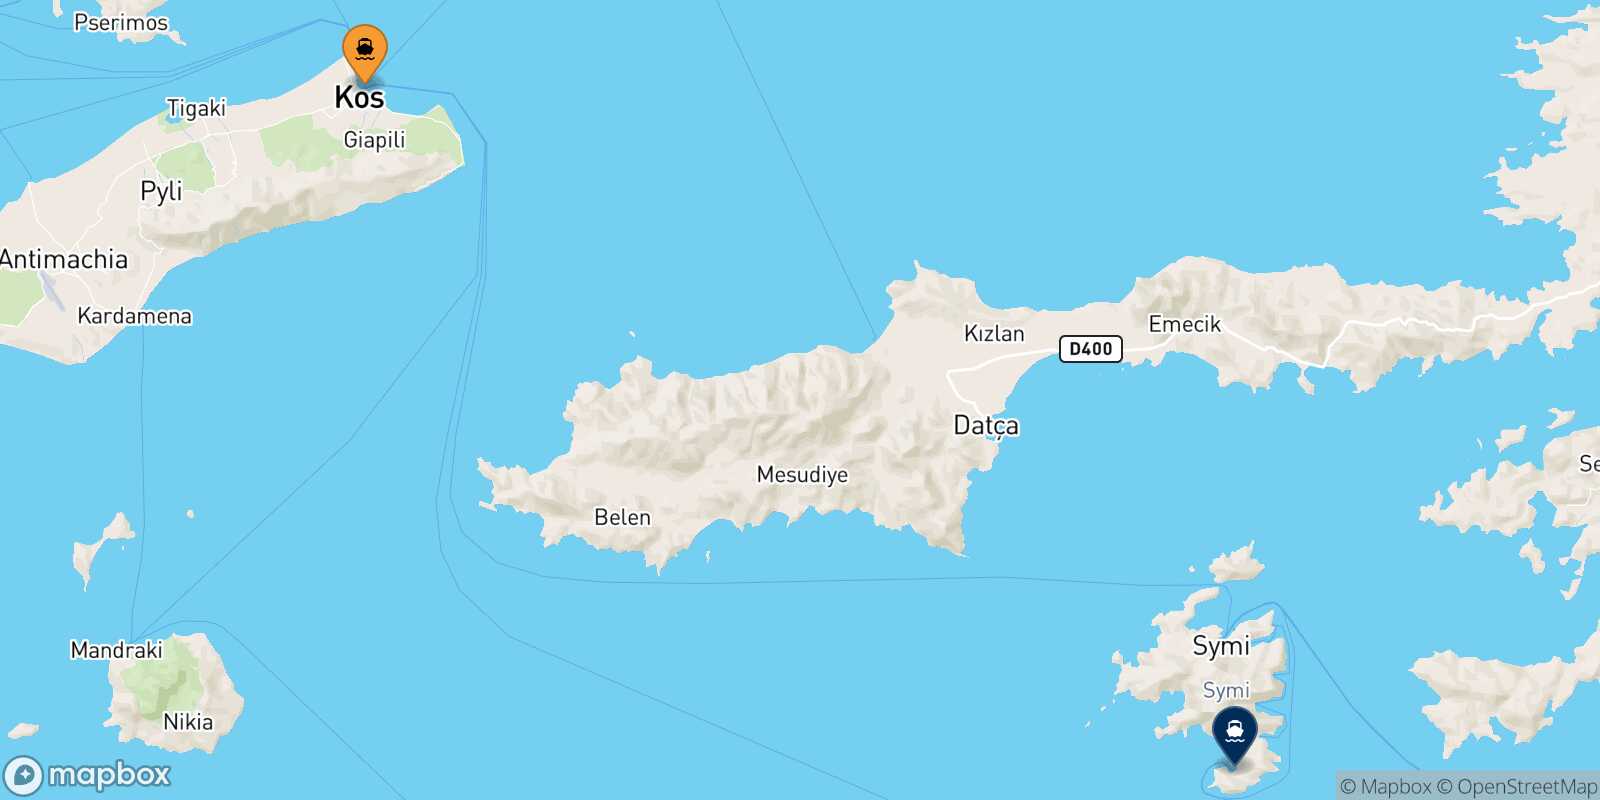 Kos Panormitis (Symi) route map